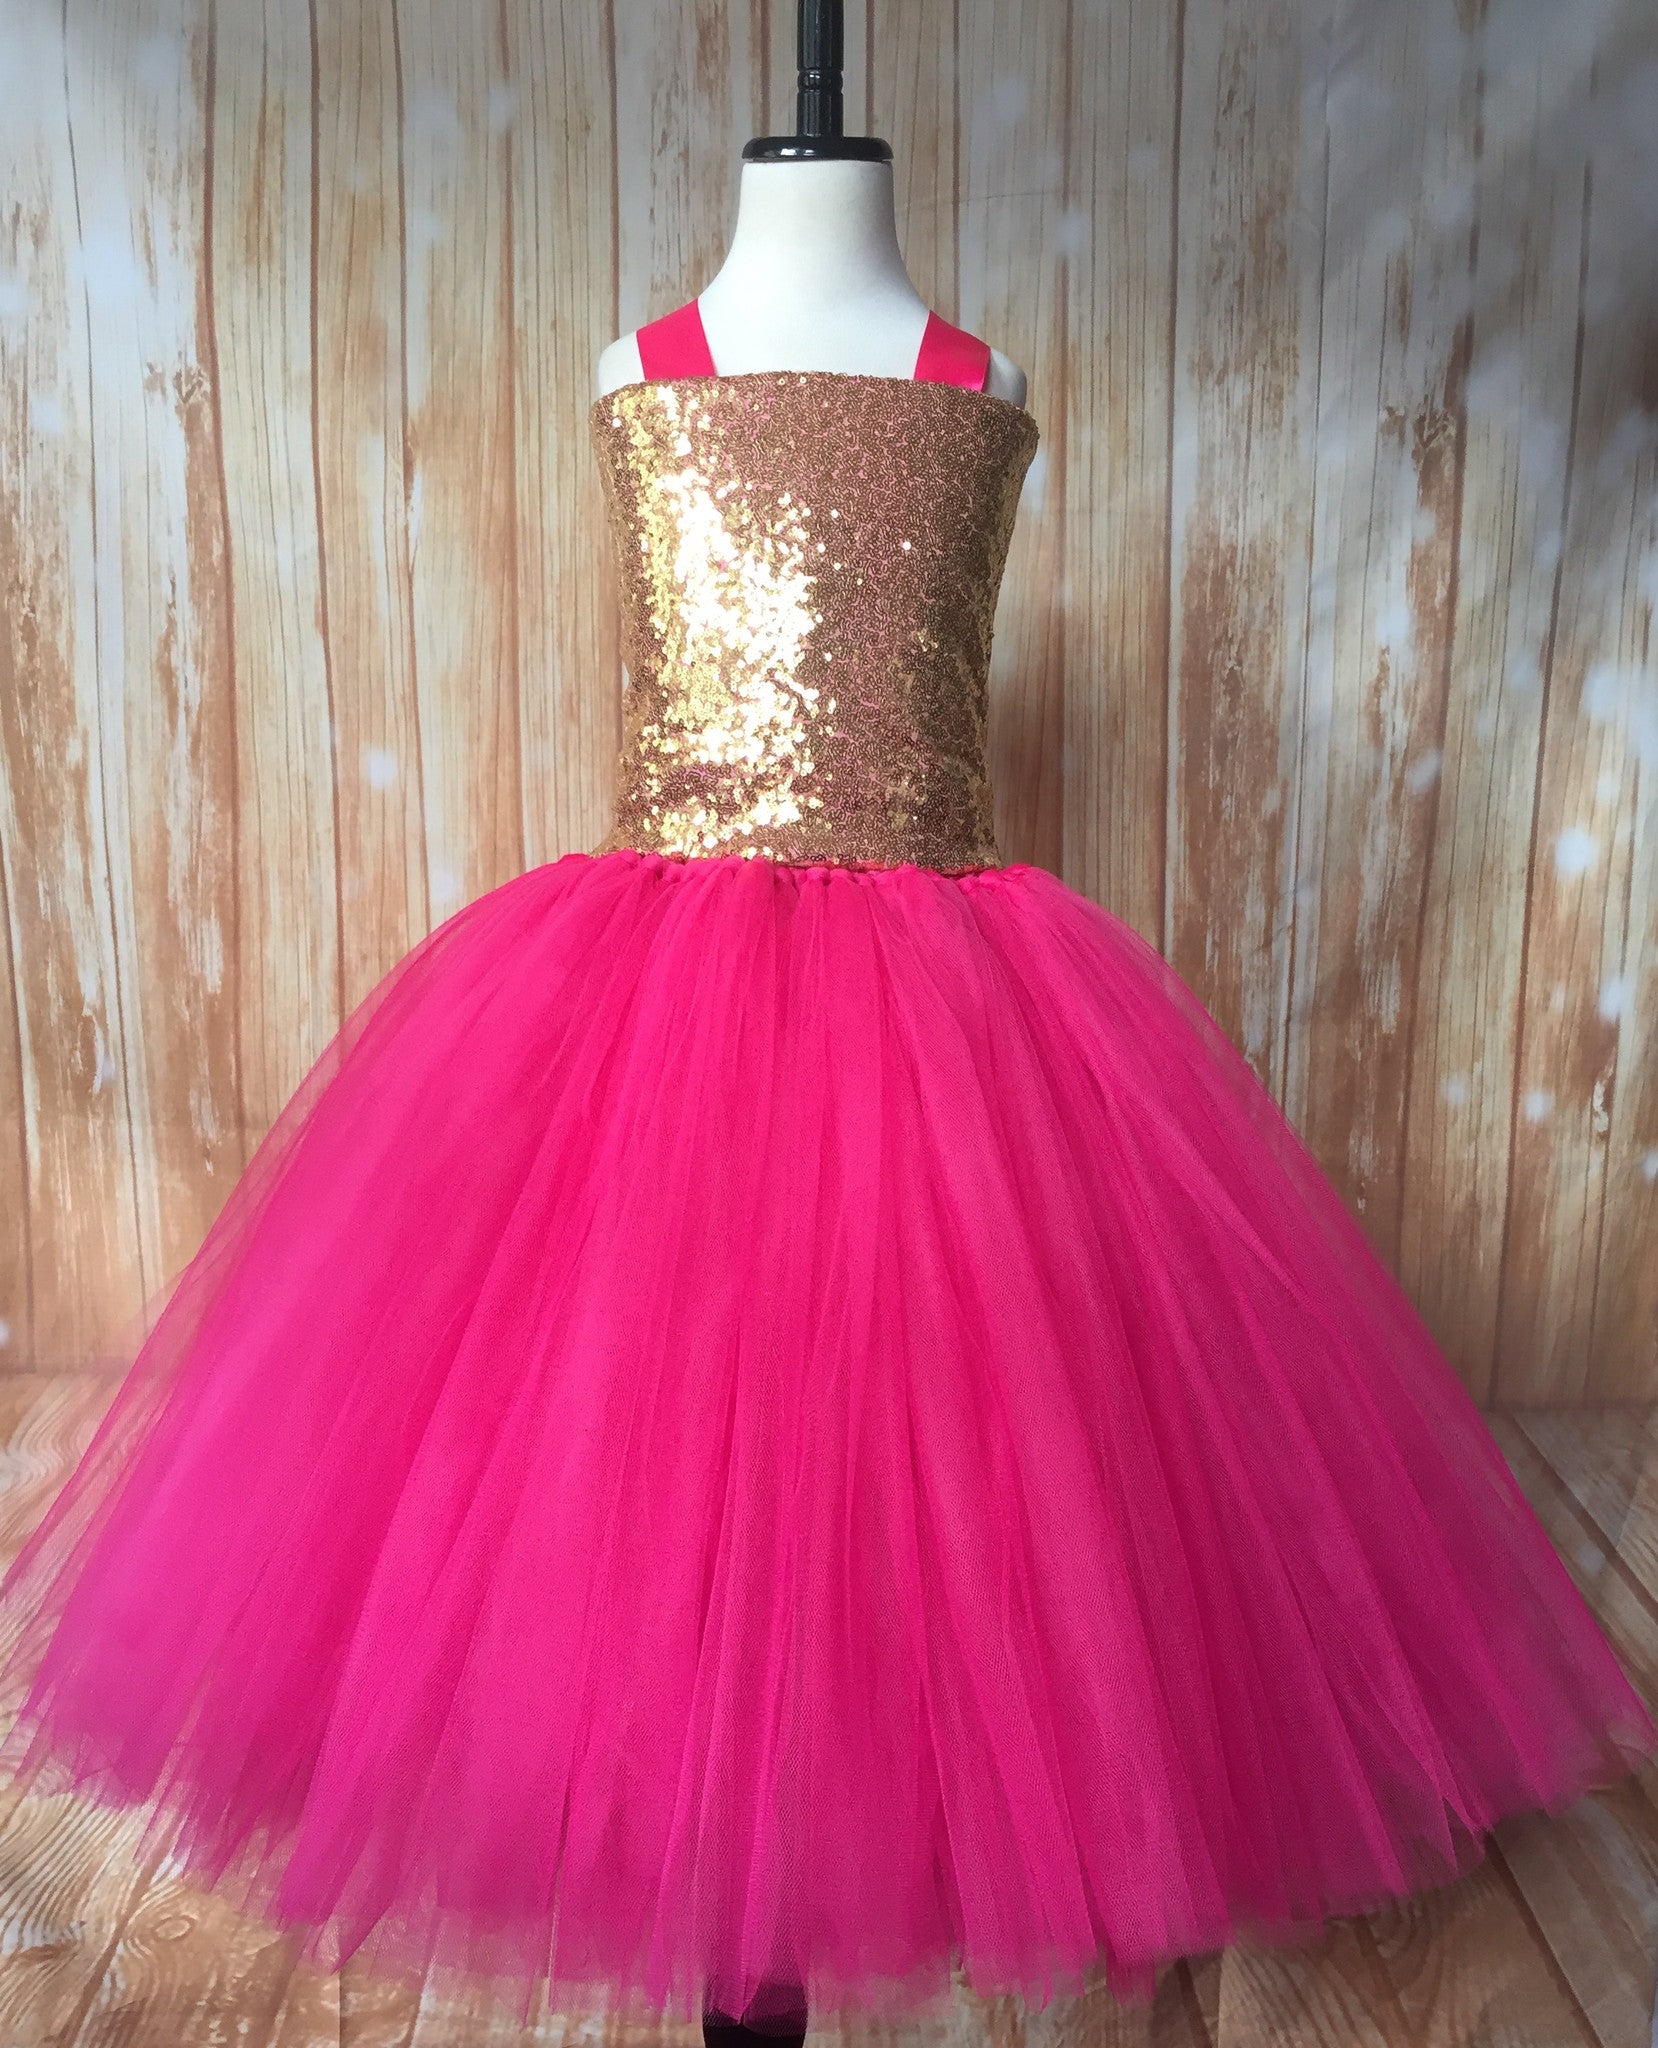 Gold & Pink Tutu, Gold and Hot Pink Tutu Dress, Girls Hot Pink & Gold Pageant Tutu - Little Ladybug Tutus